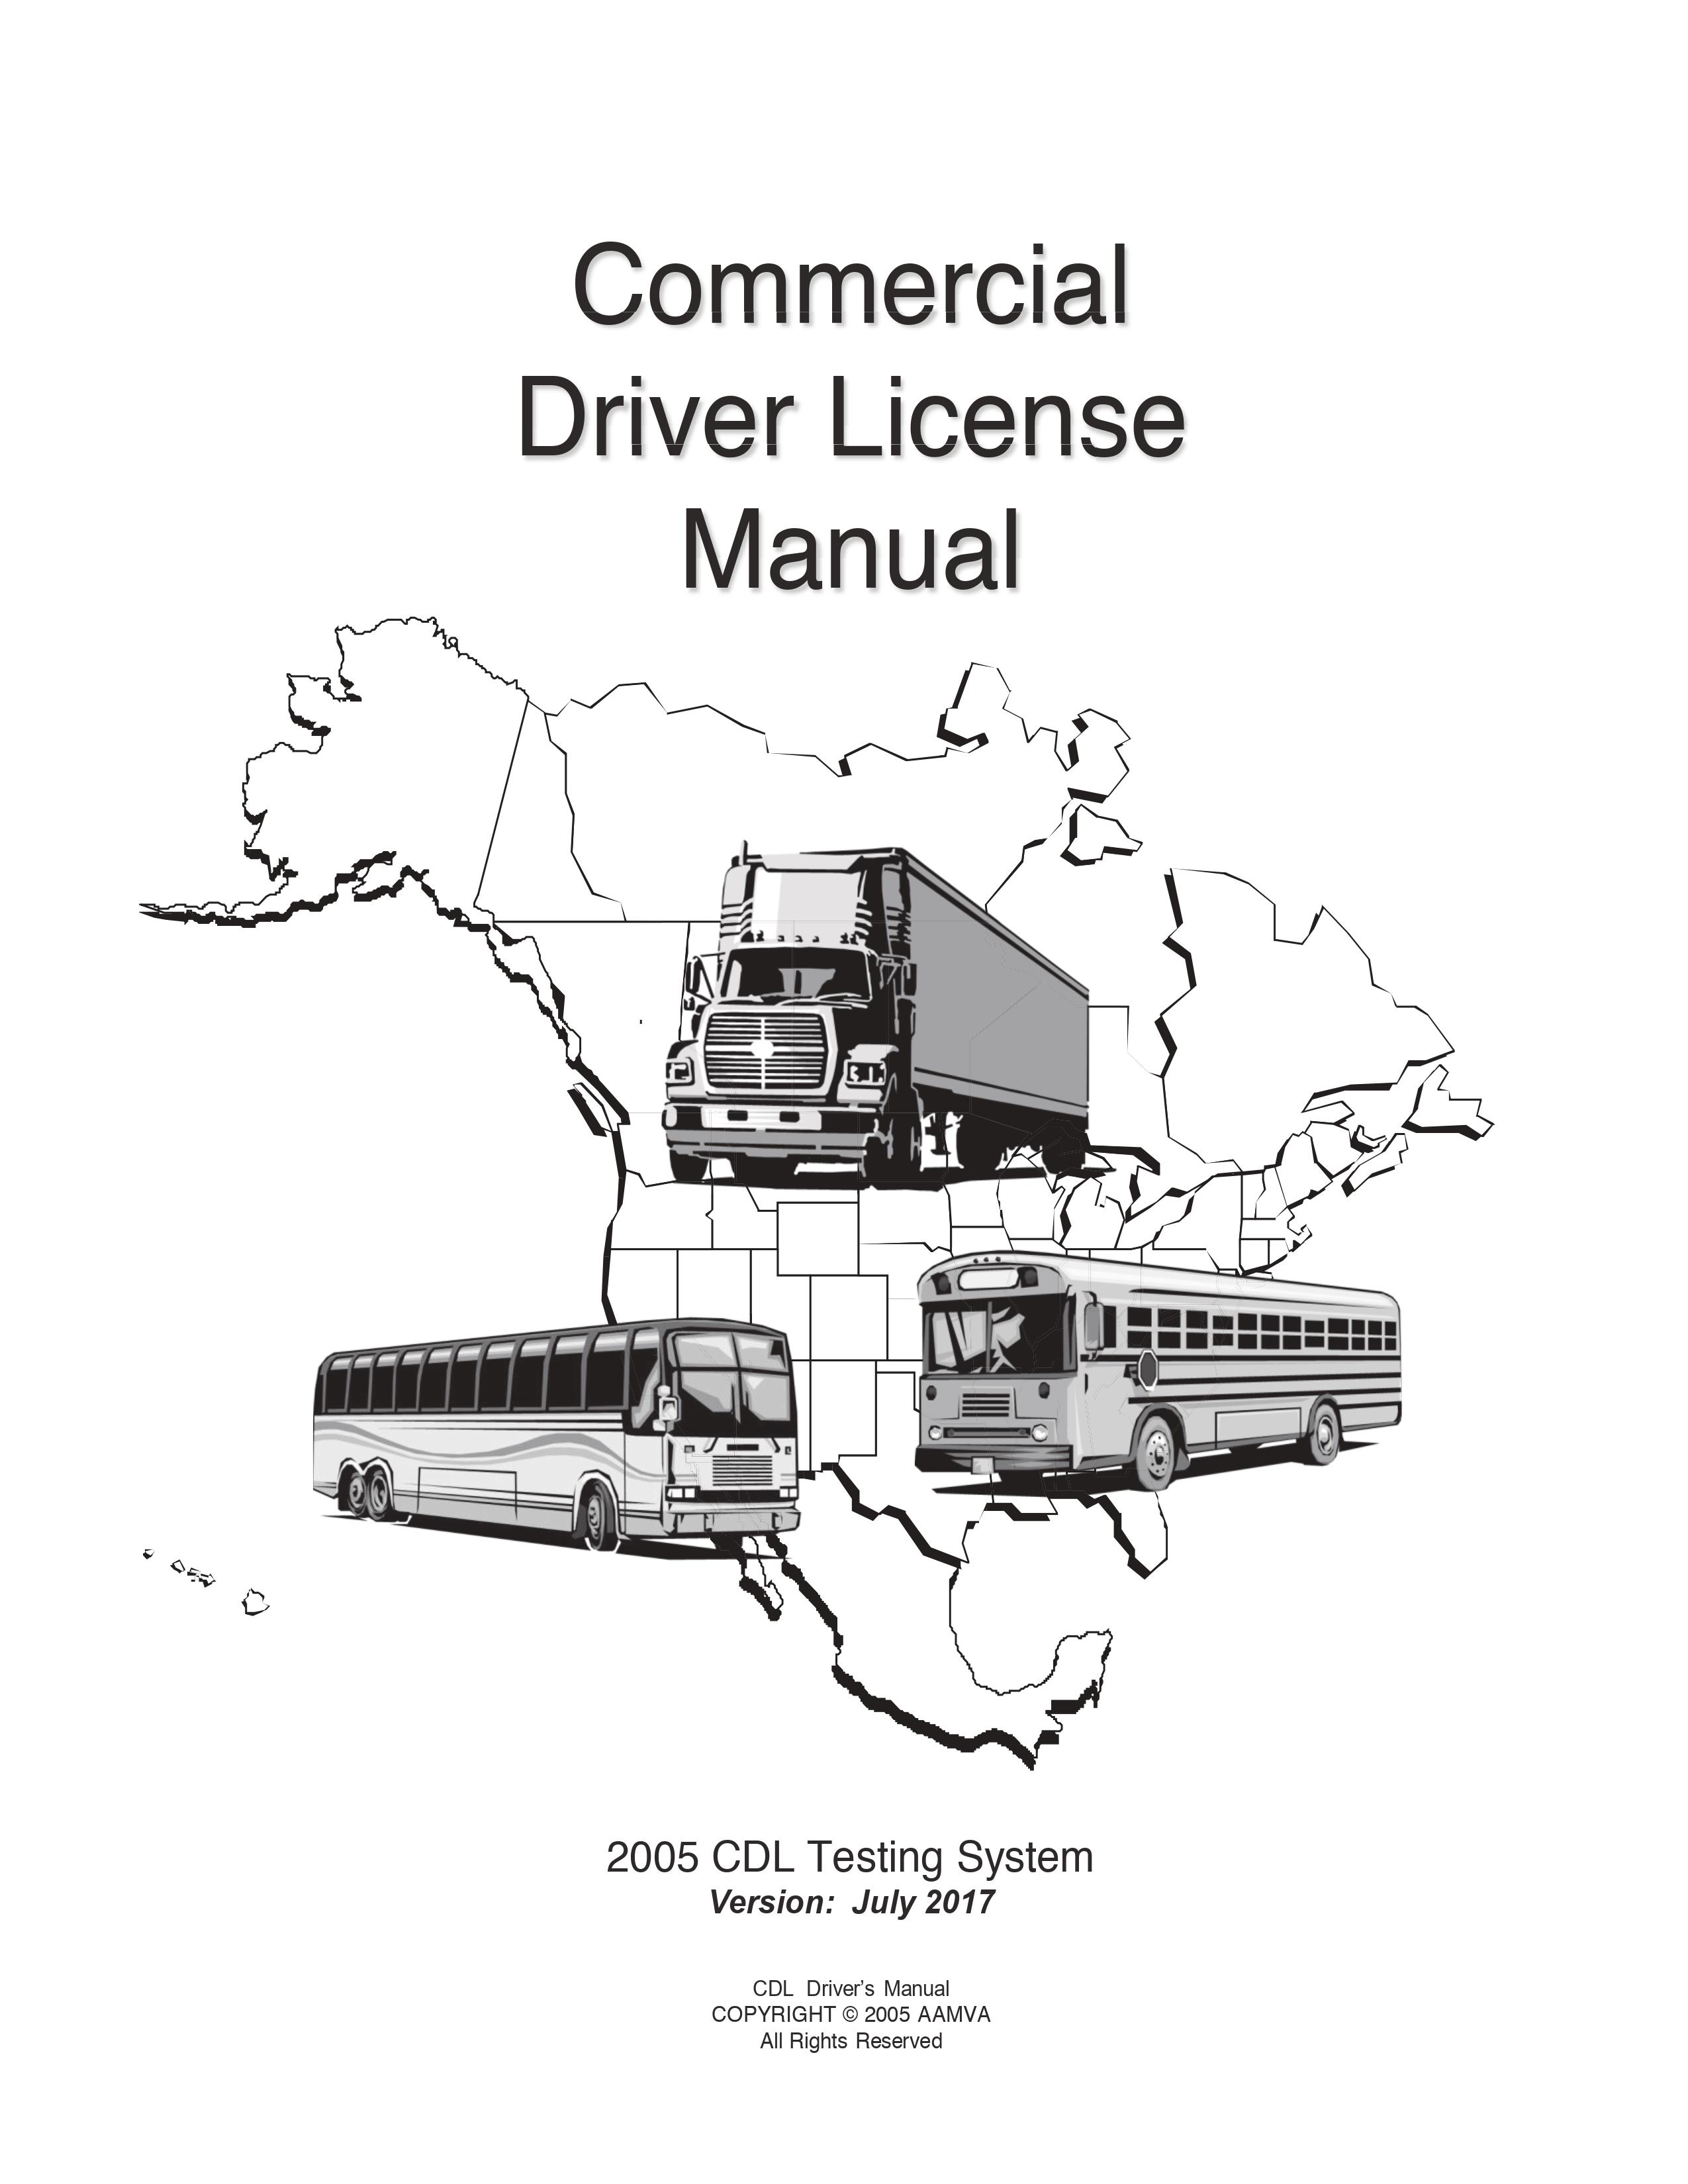 Indiana's CDL Manual